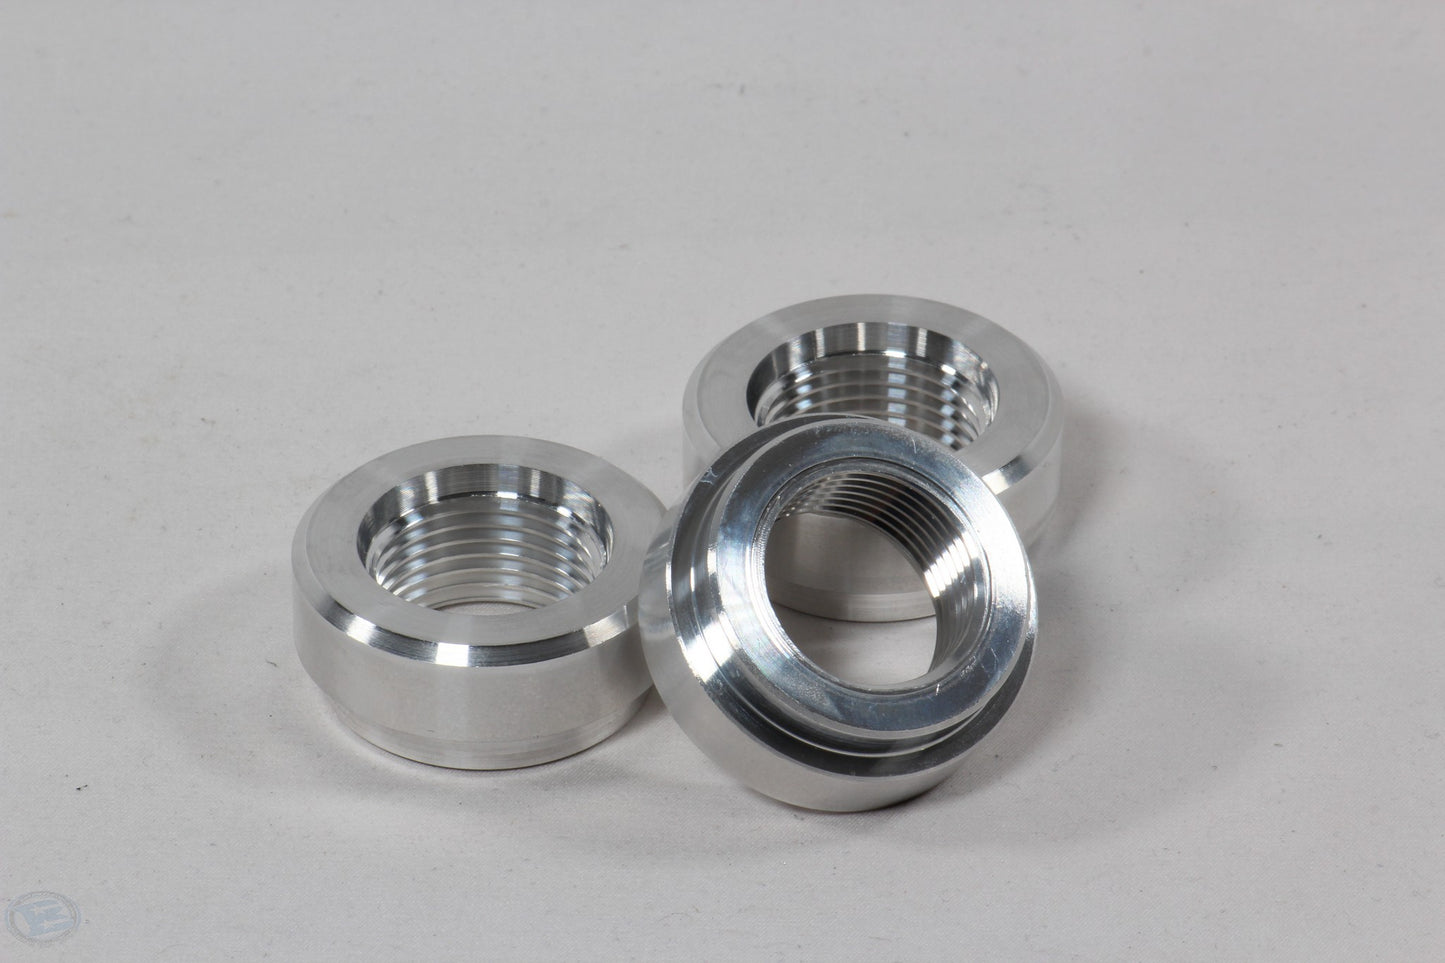 Aluminum SAE O-Ring Female Weld Fitting